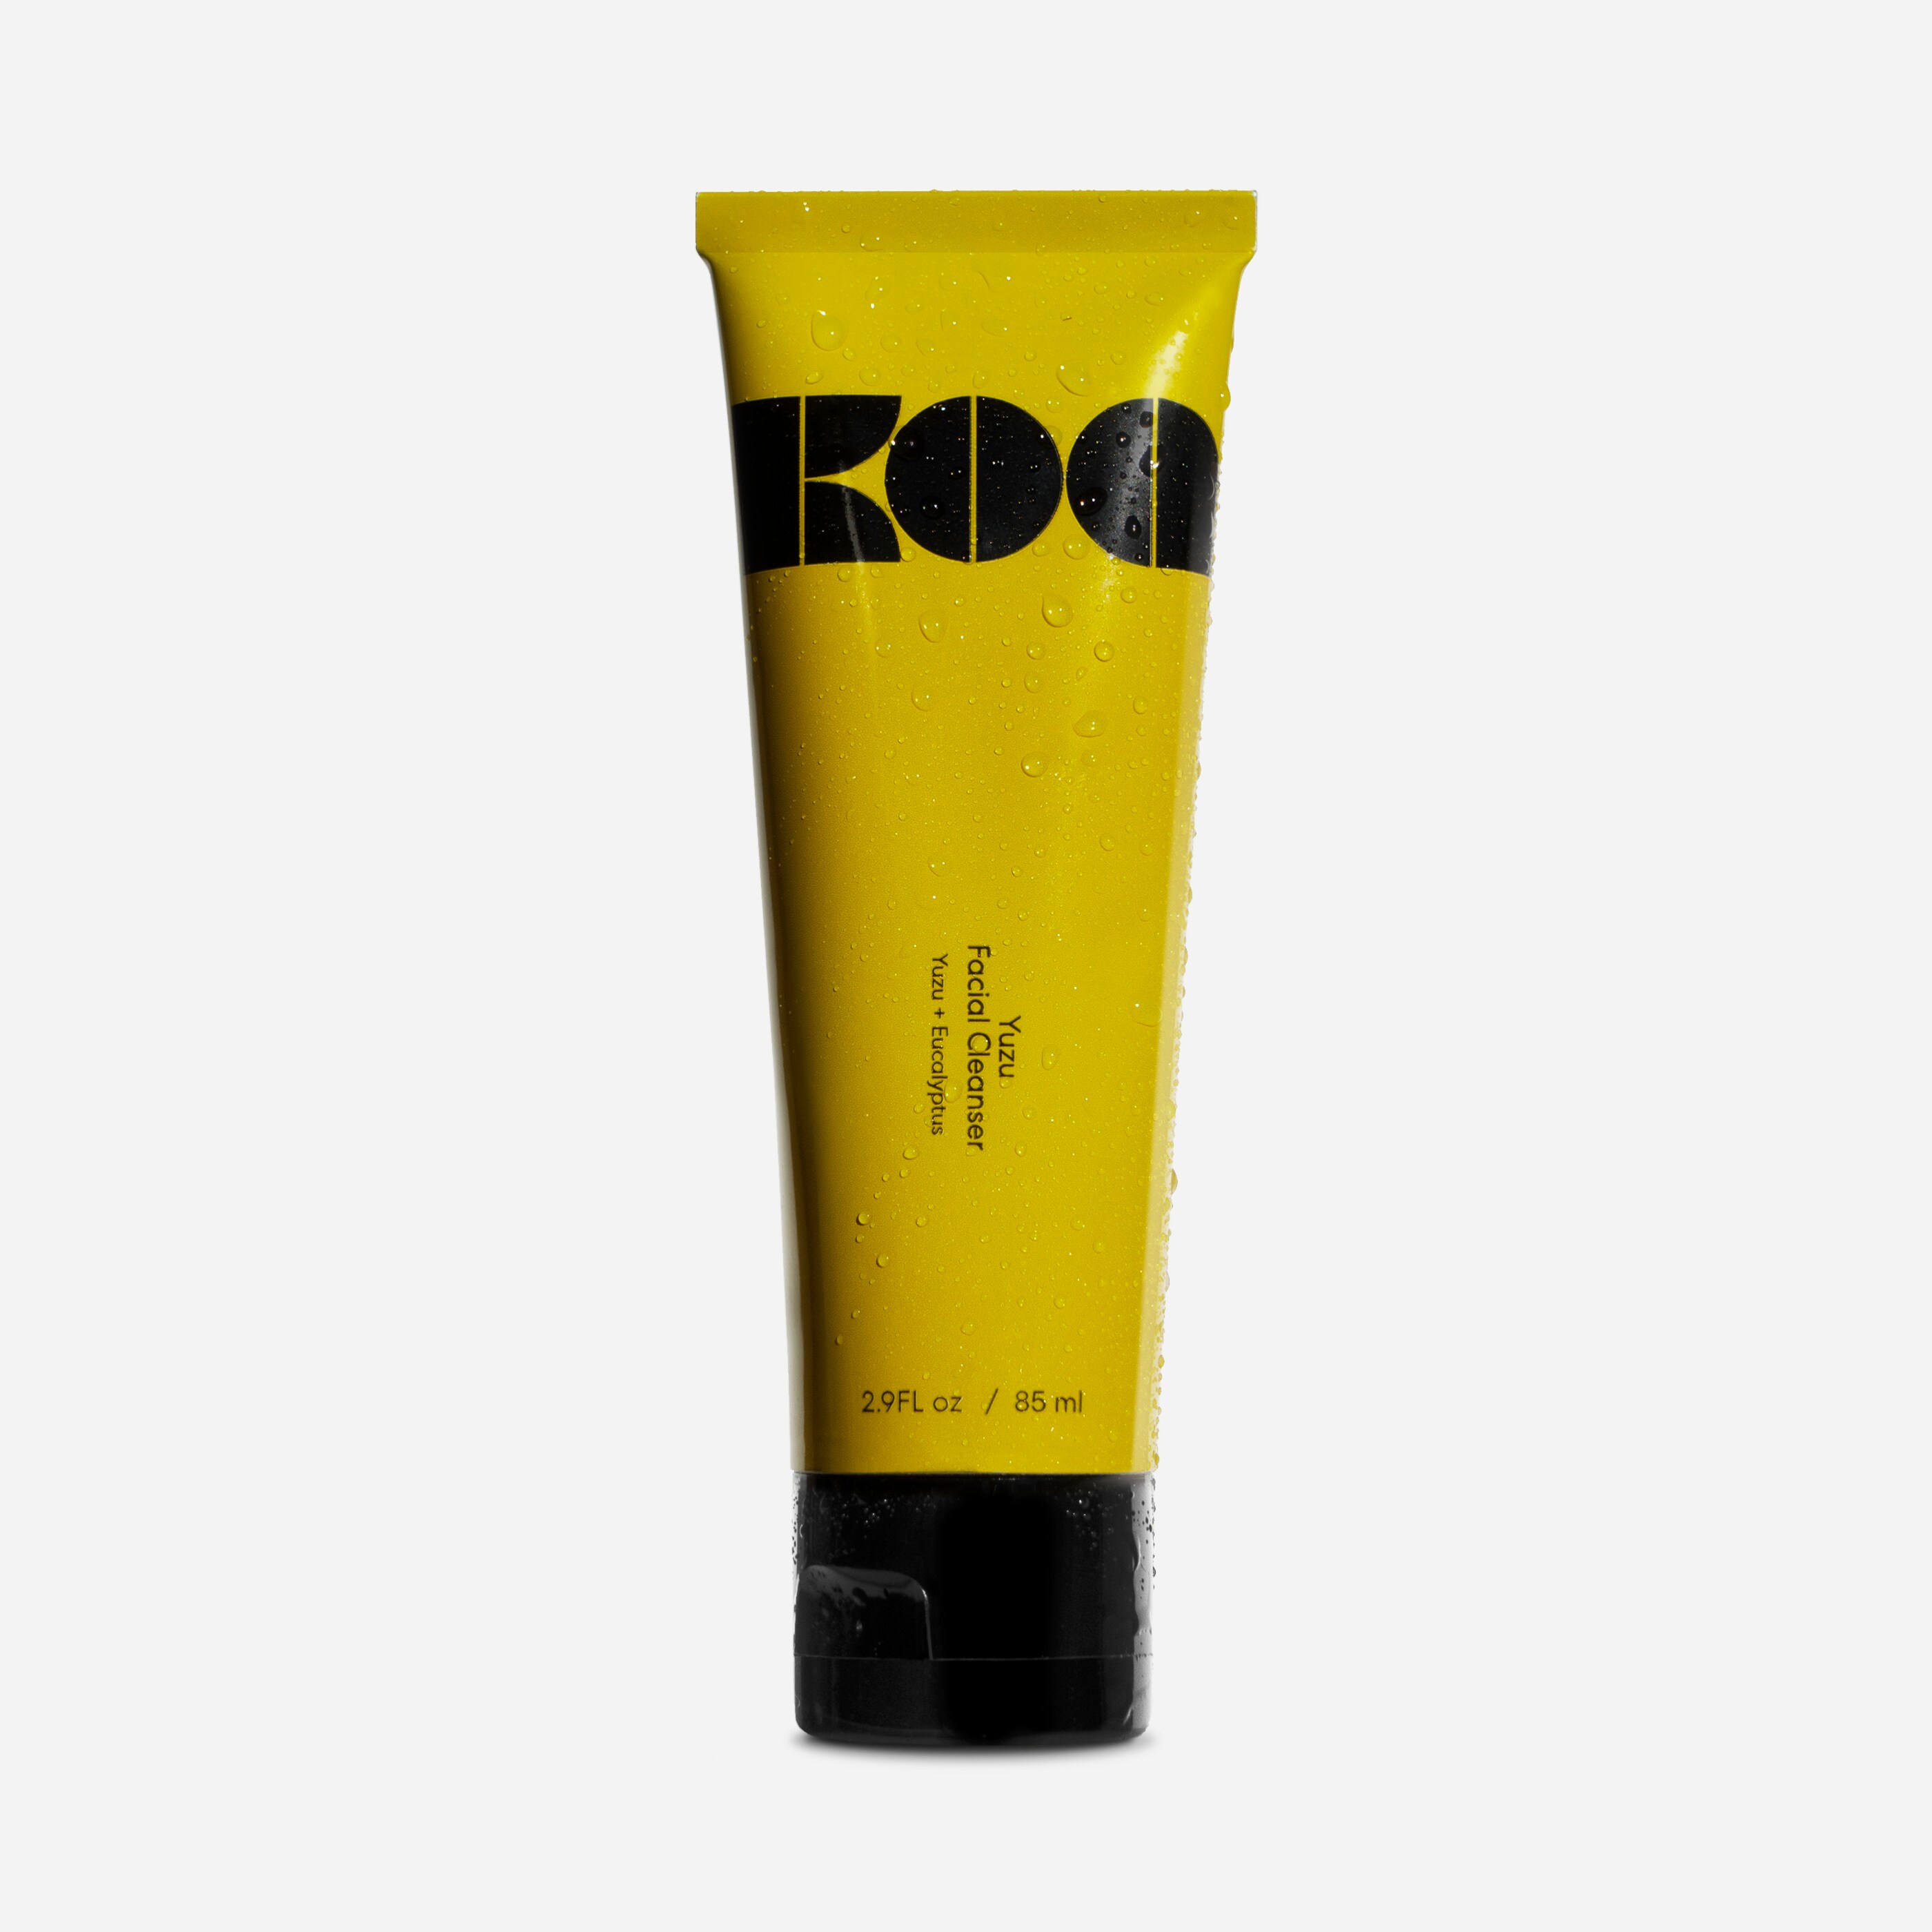  Koa™ daily face cleanser